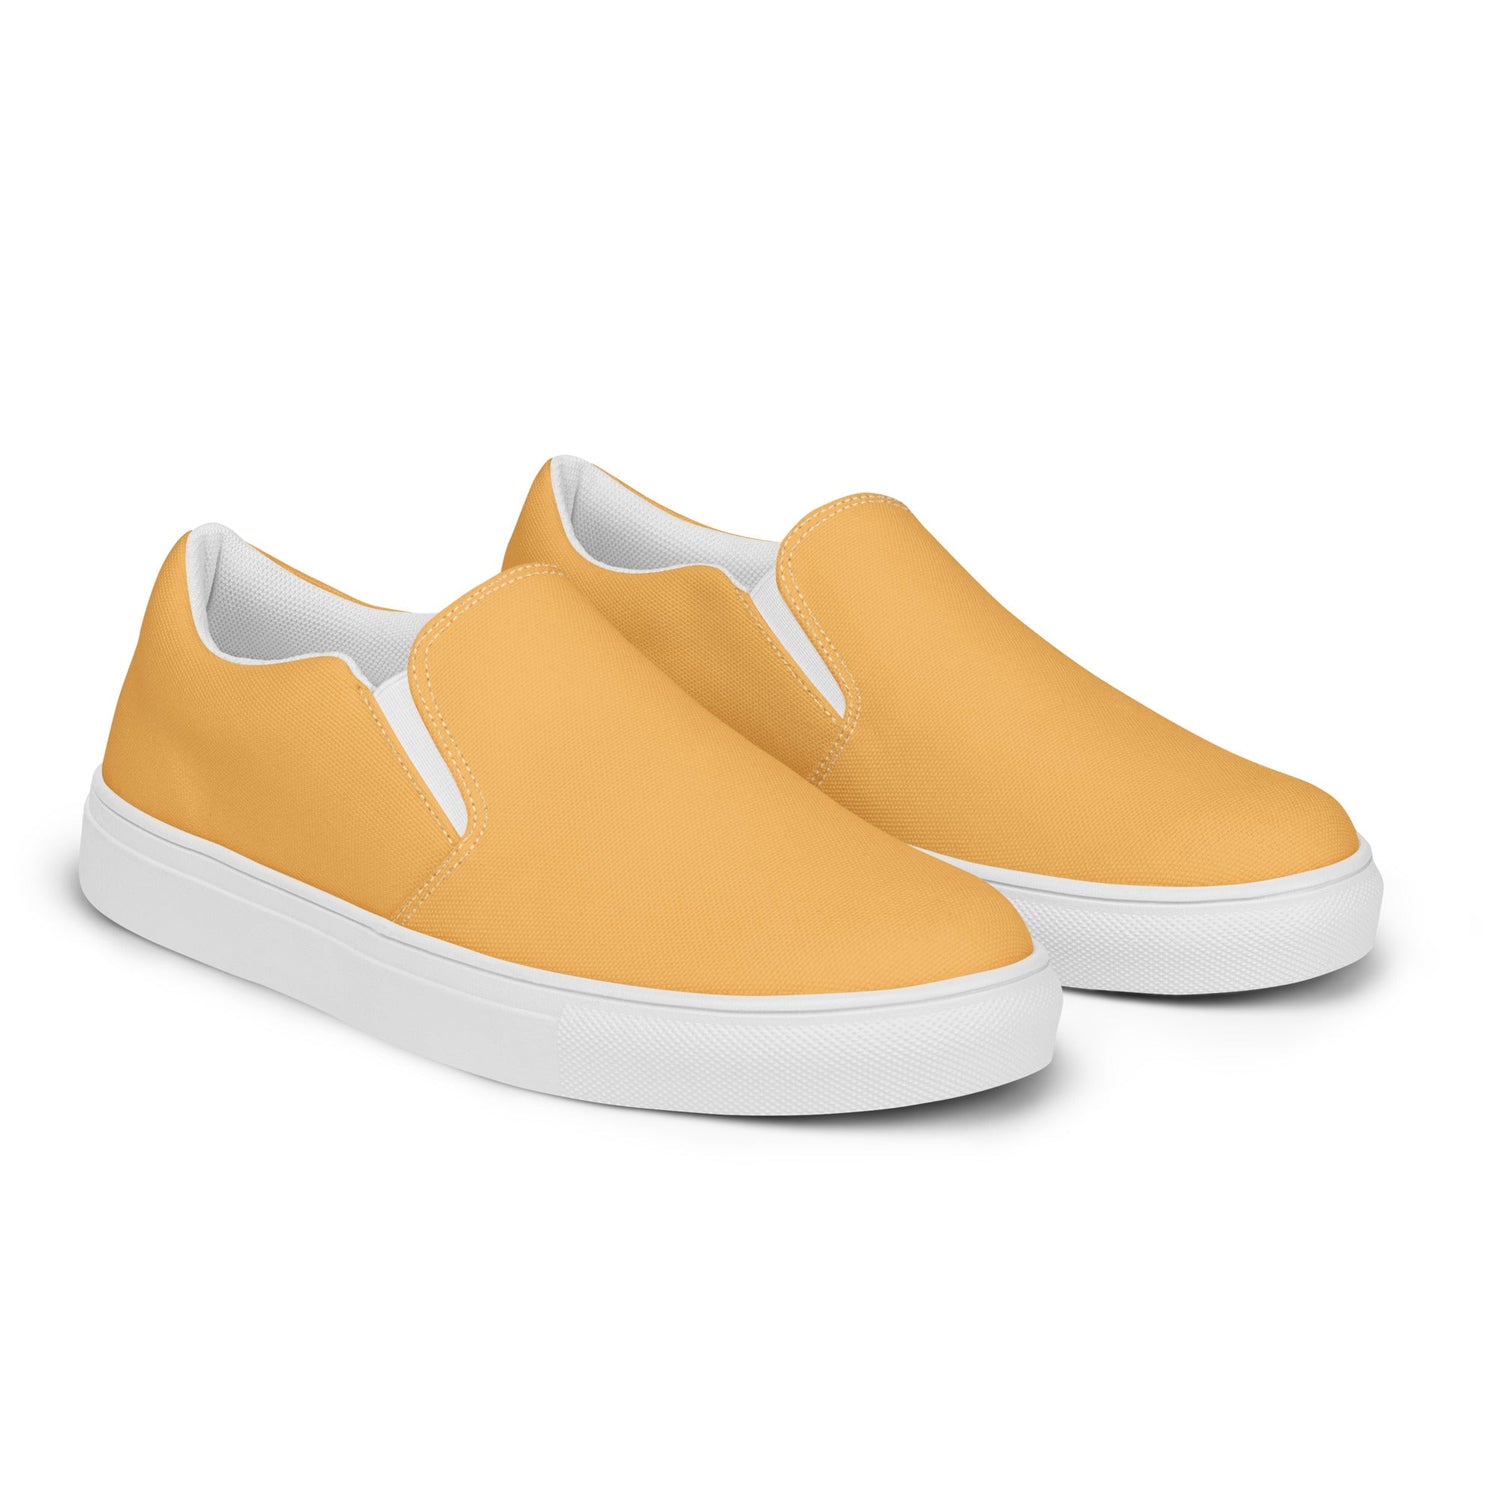 klasneakers Women’s slip-on canvas shoes - Light Orange